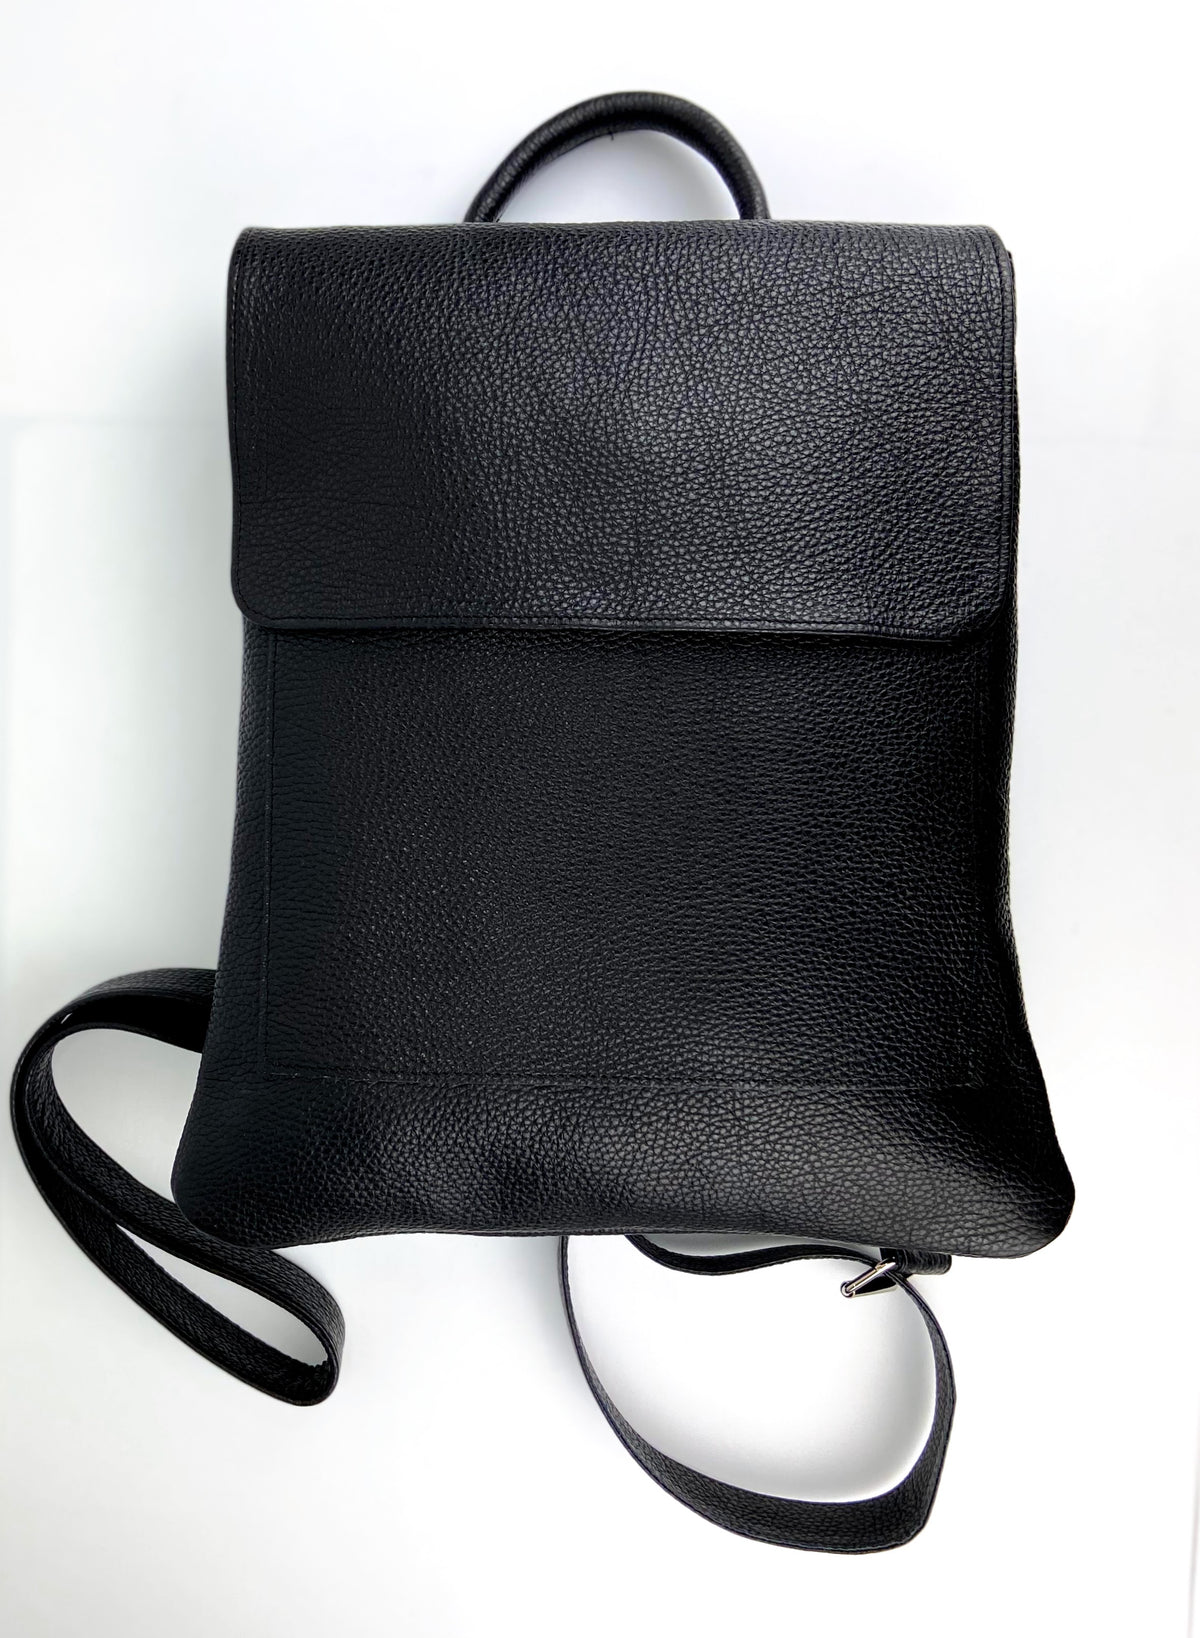 Leslie Dinky Pal rucksack in black pebbled leather